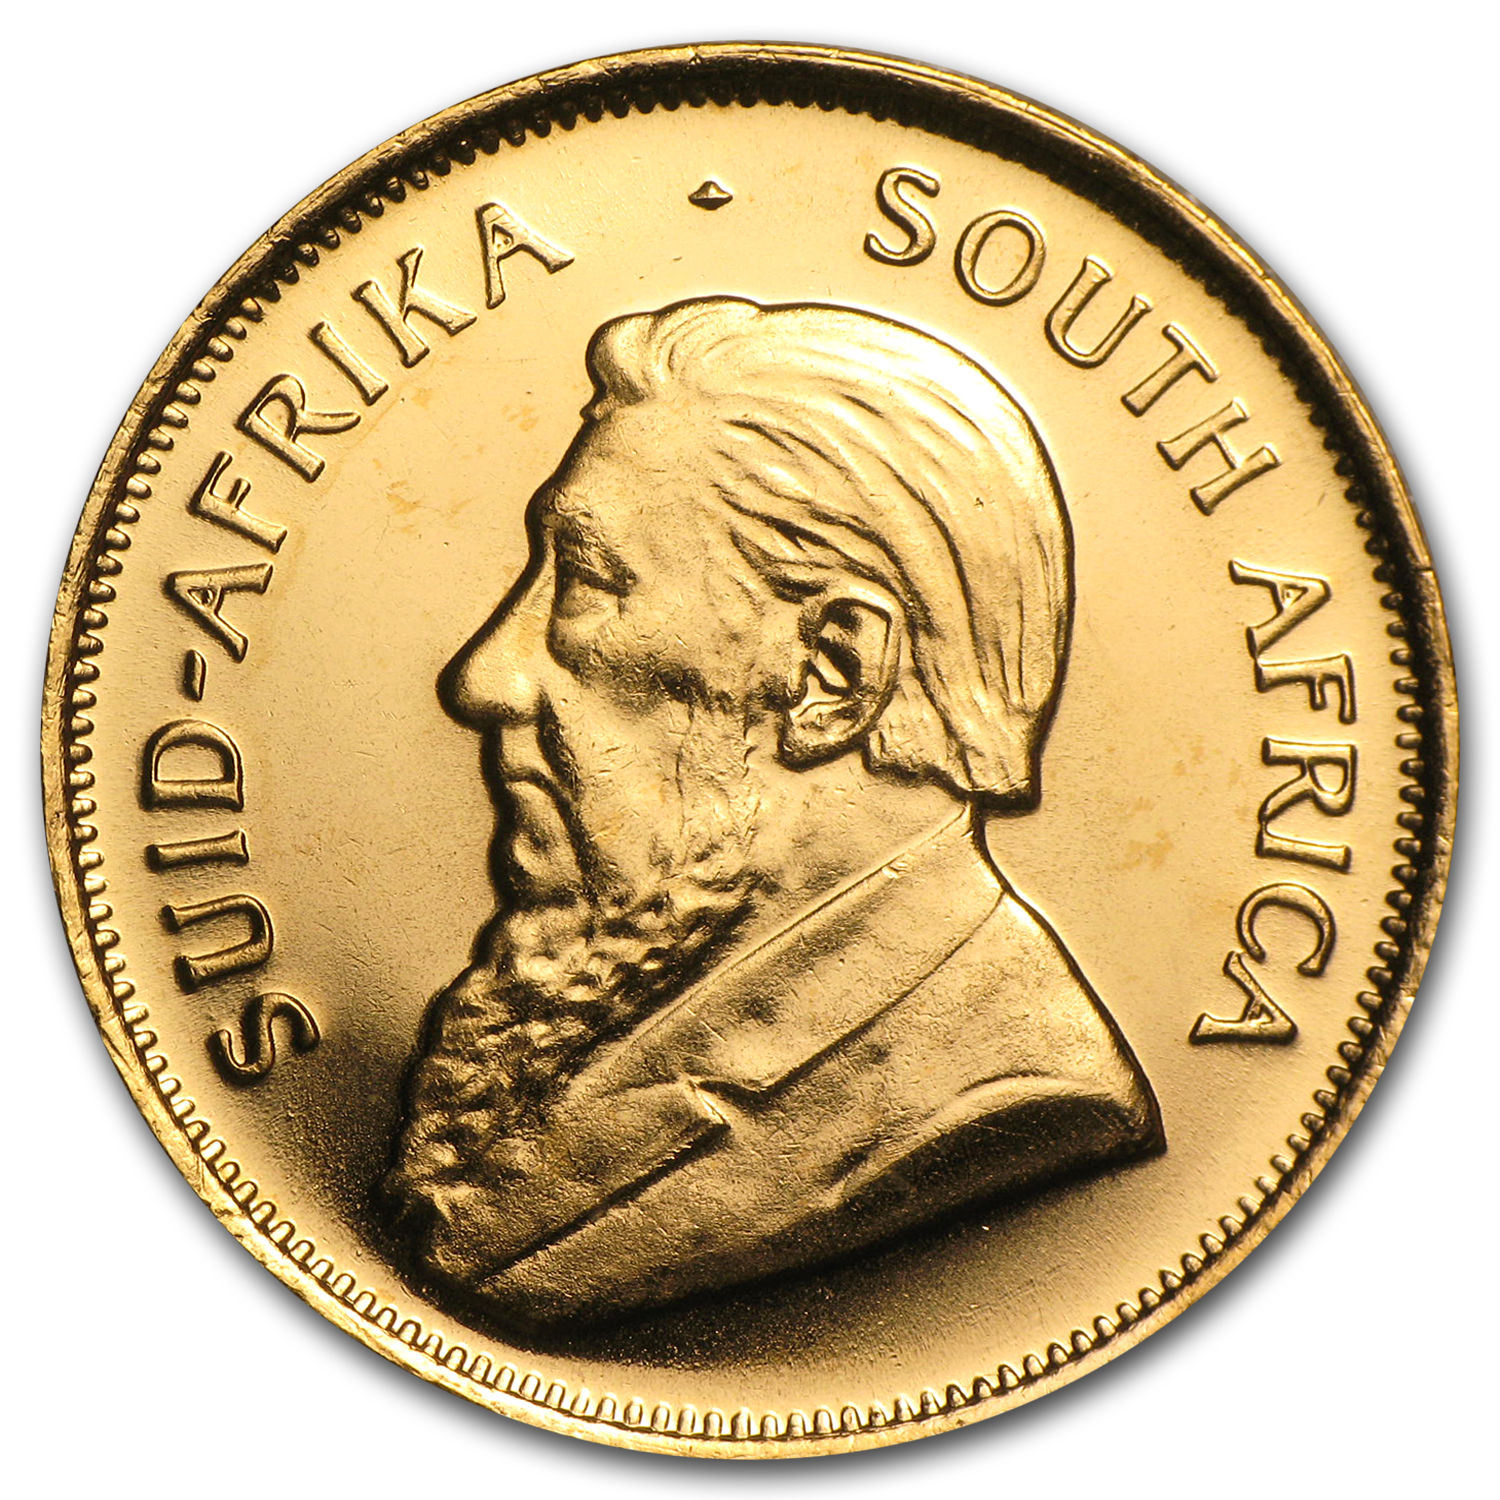 South Africa 1/2 oz Gold Krugerrand (Random Year) - SKU #1016